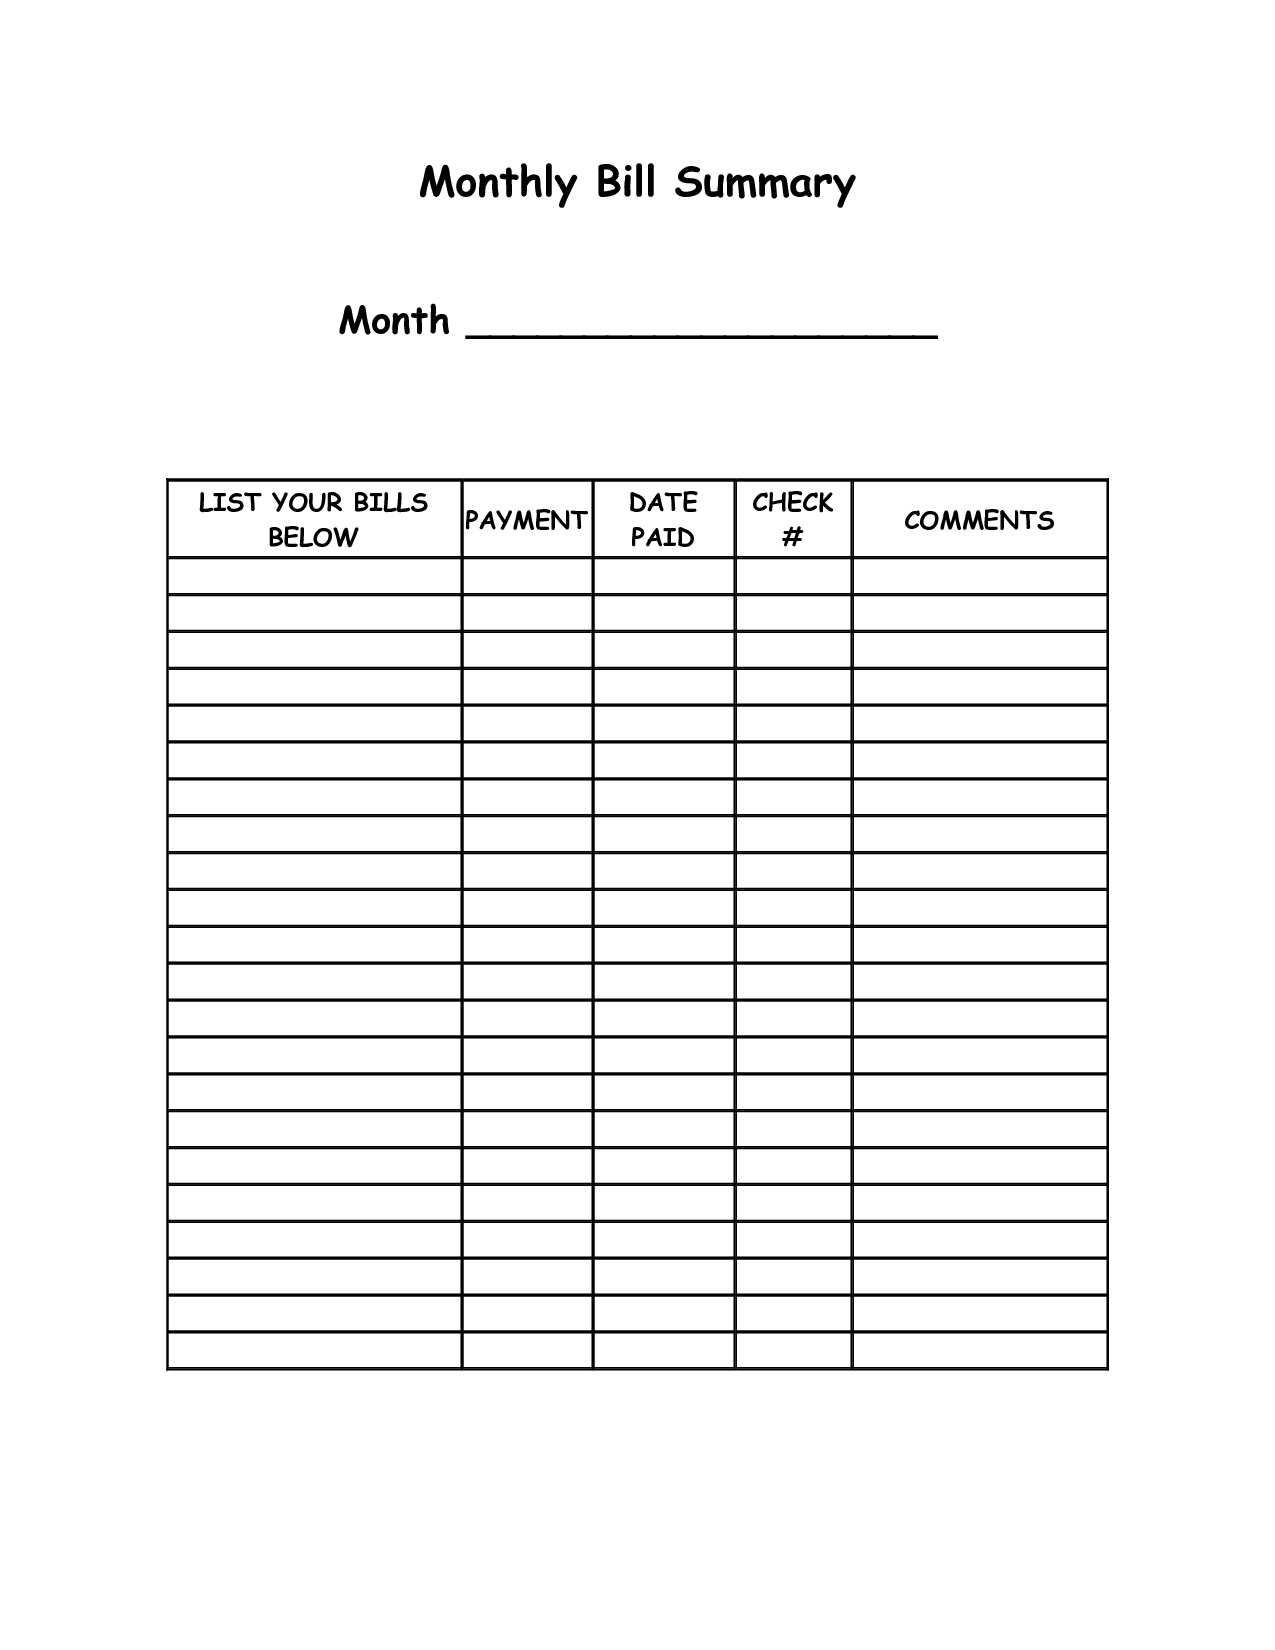 Monthly Bill Summary Doc | Organization | Bill Payment Organization inside Blank Monthly Bills Calendar Printable